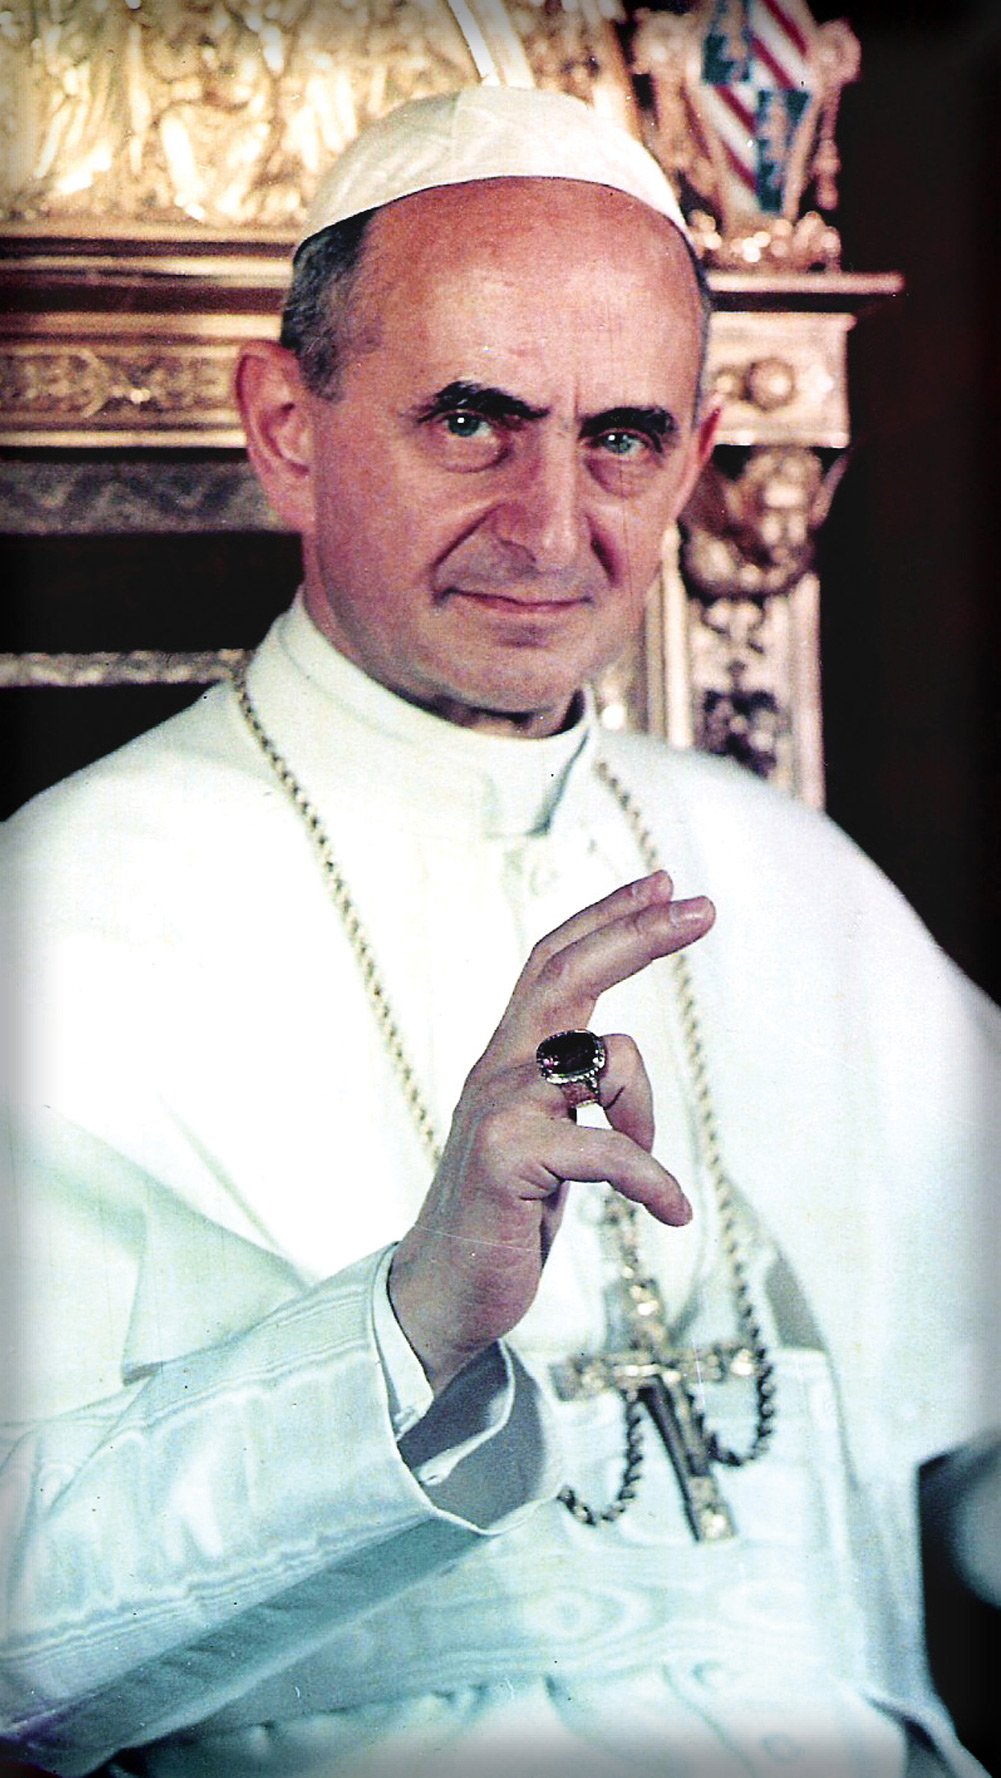 Blessed Pope Paul VI